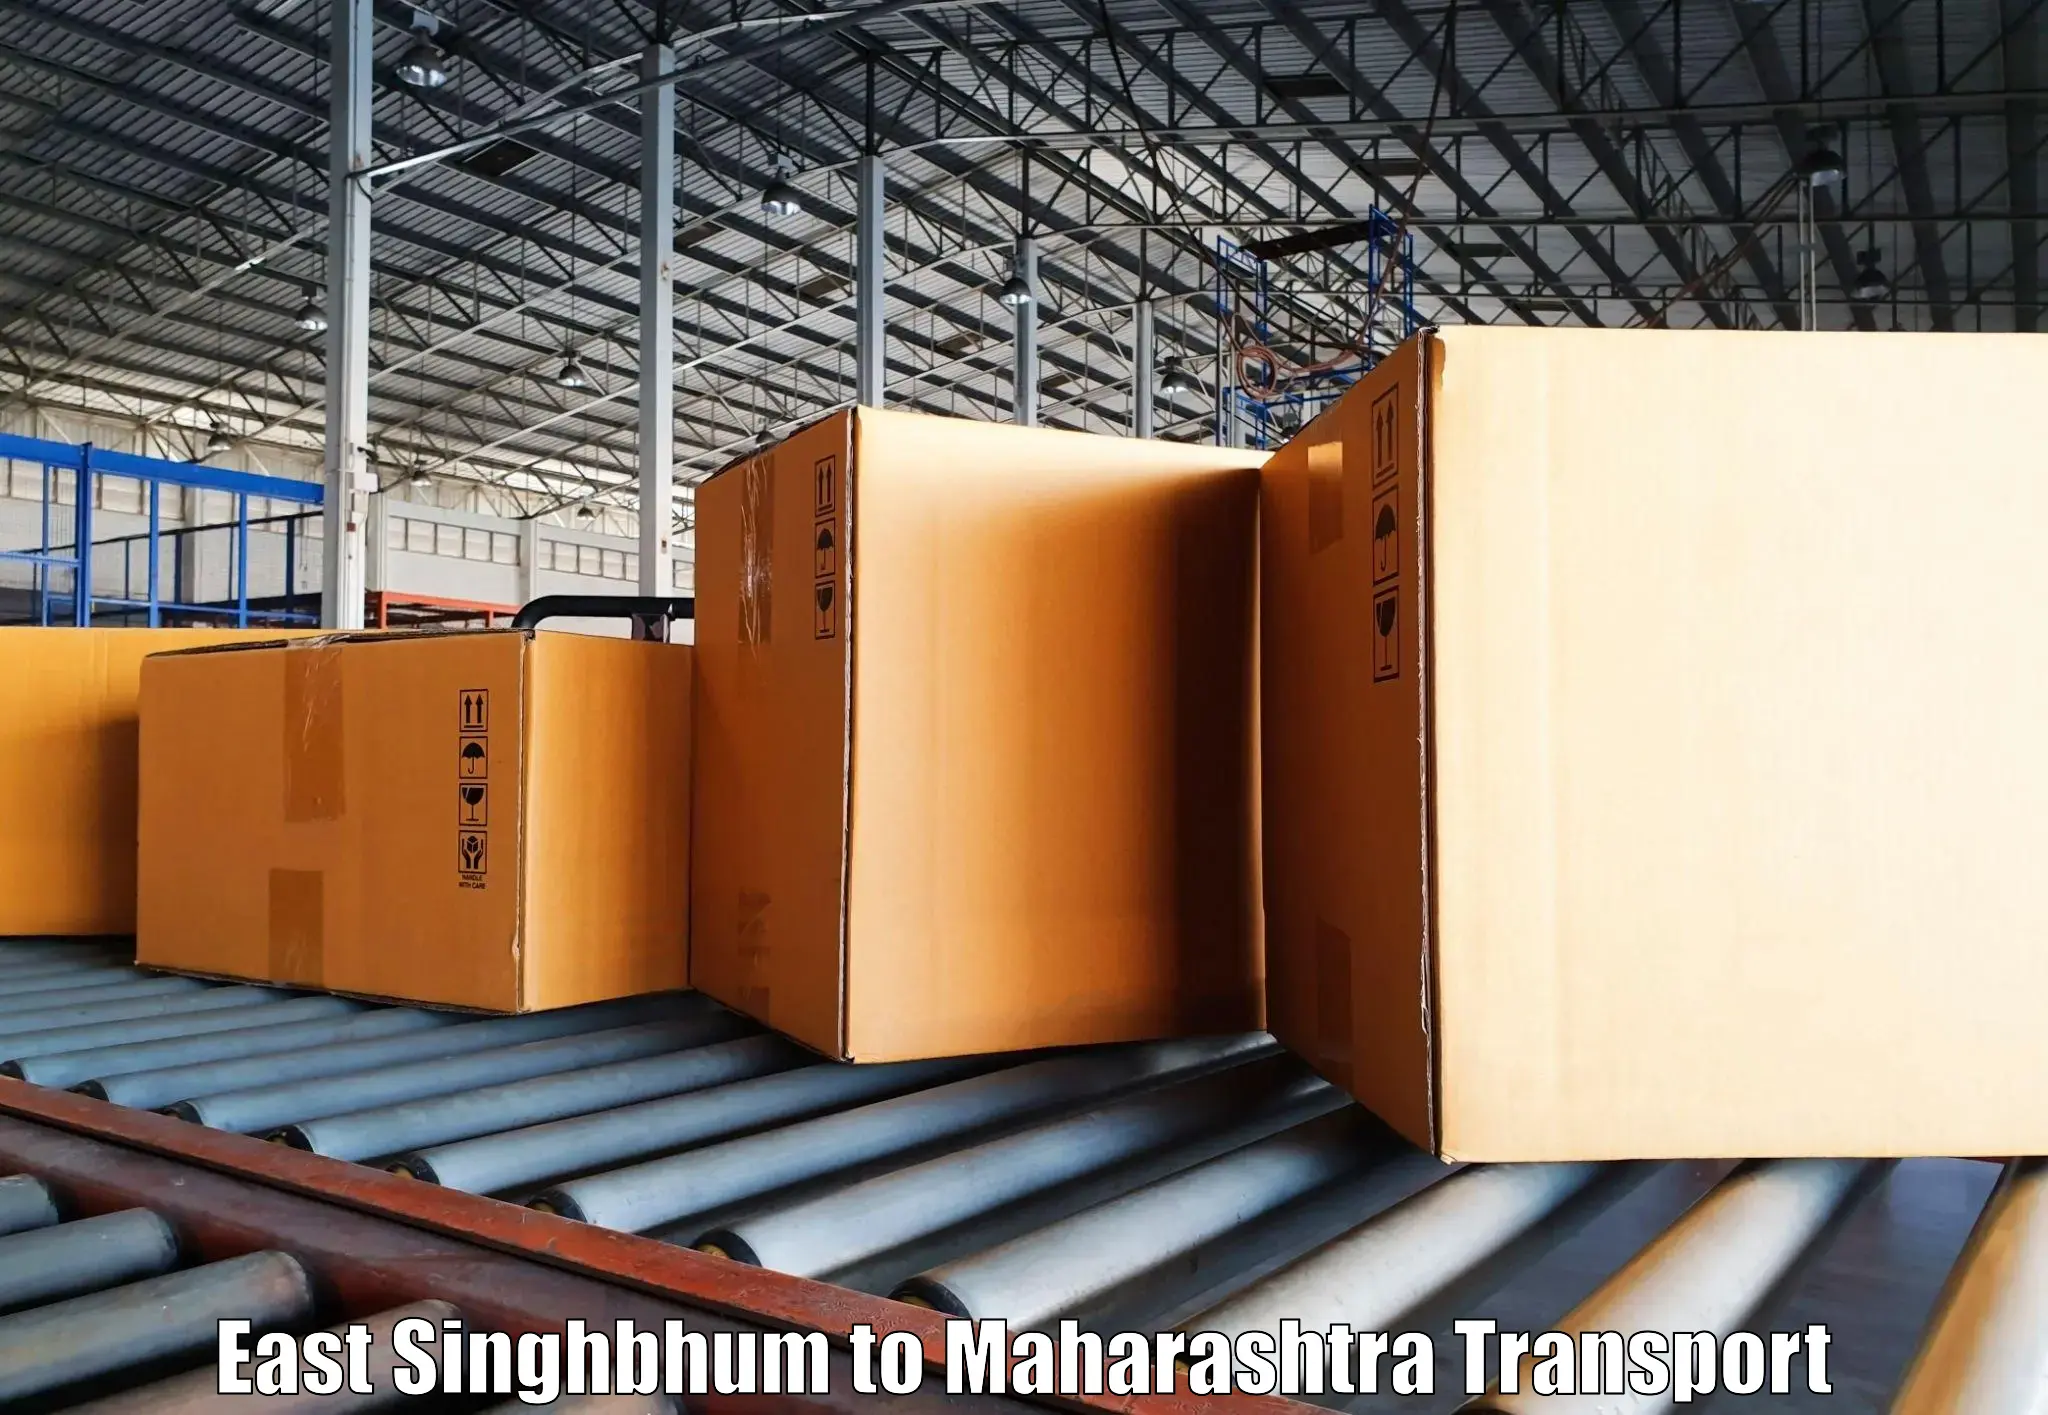 Transport in sharing East Singhbhum to Solapur